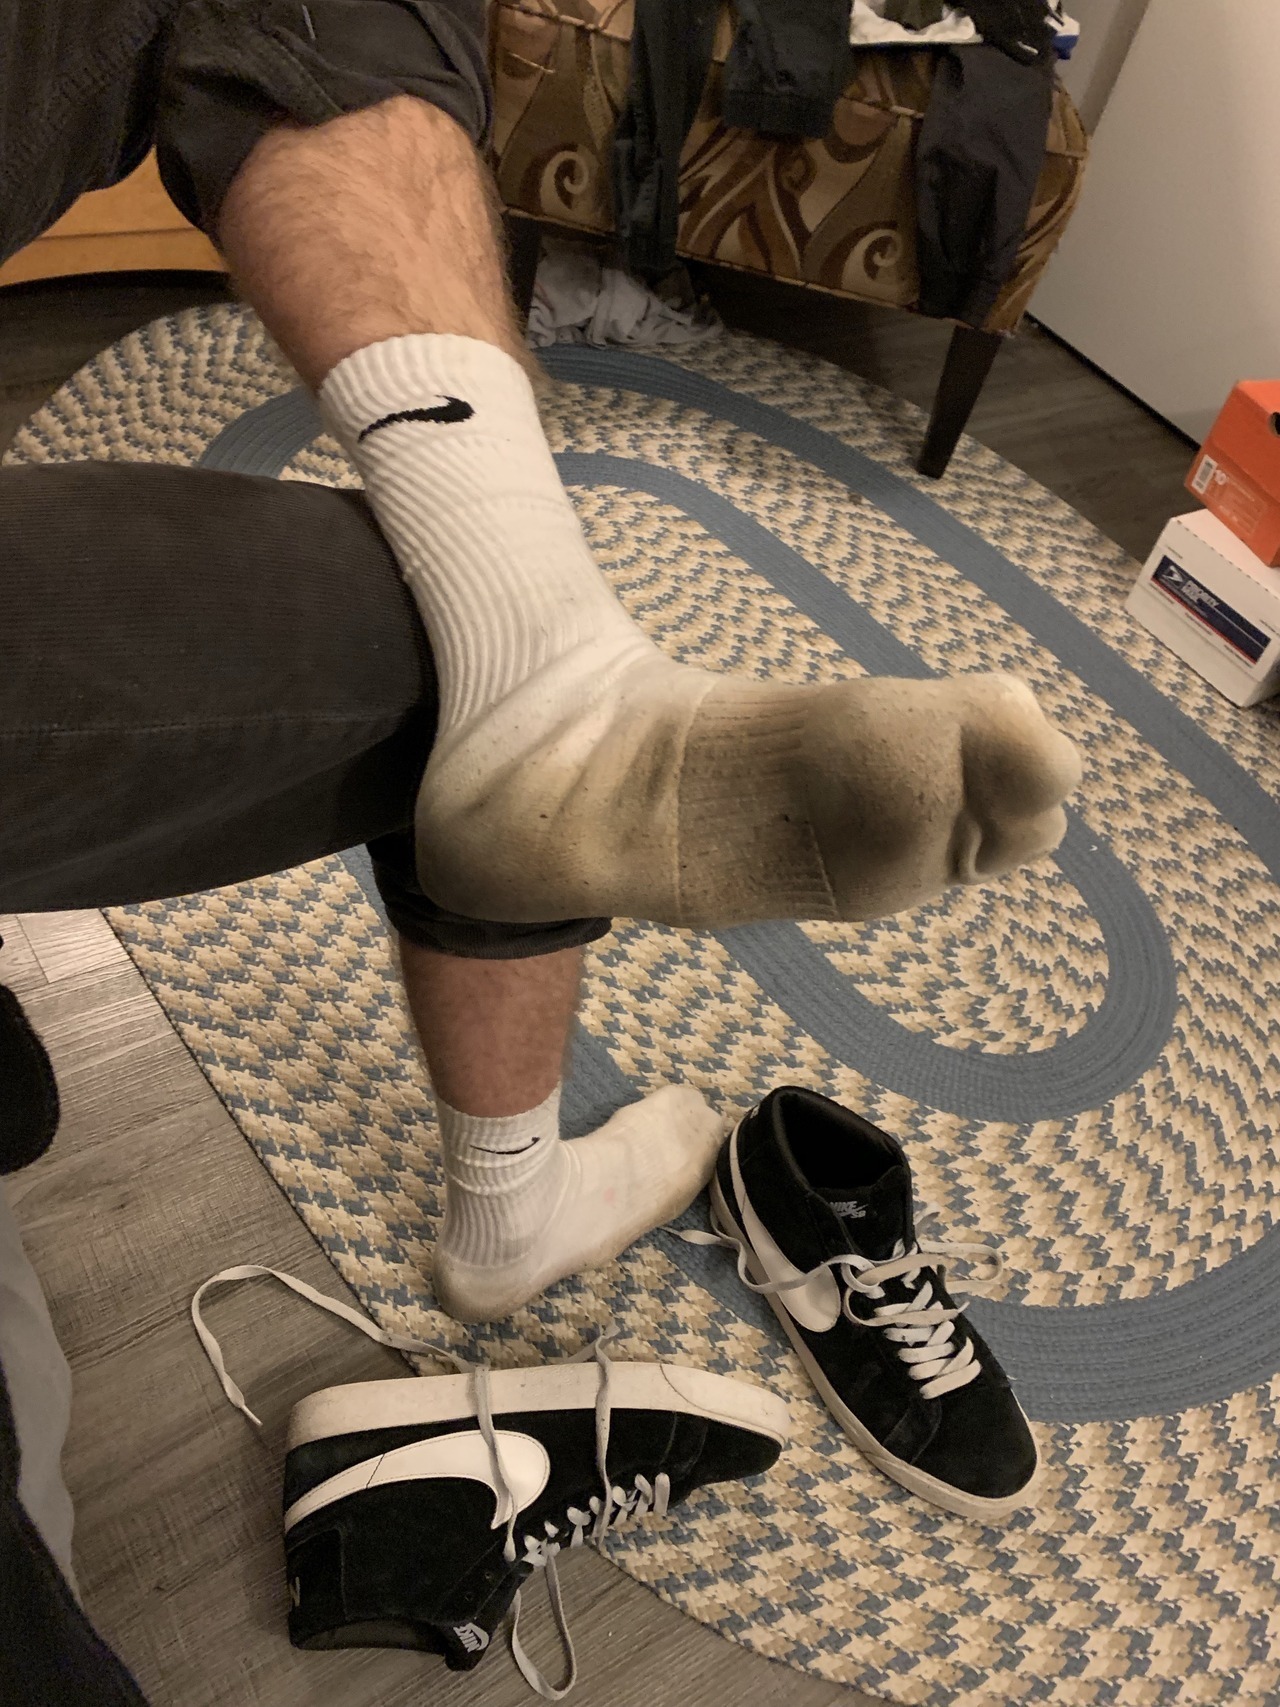 Taking off shoes socks